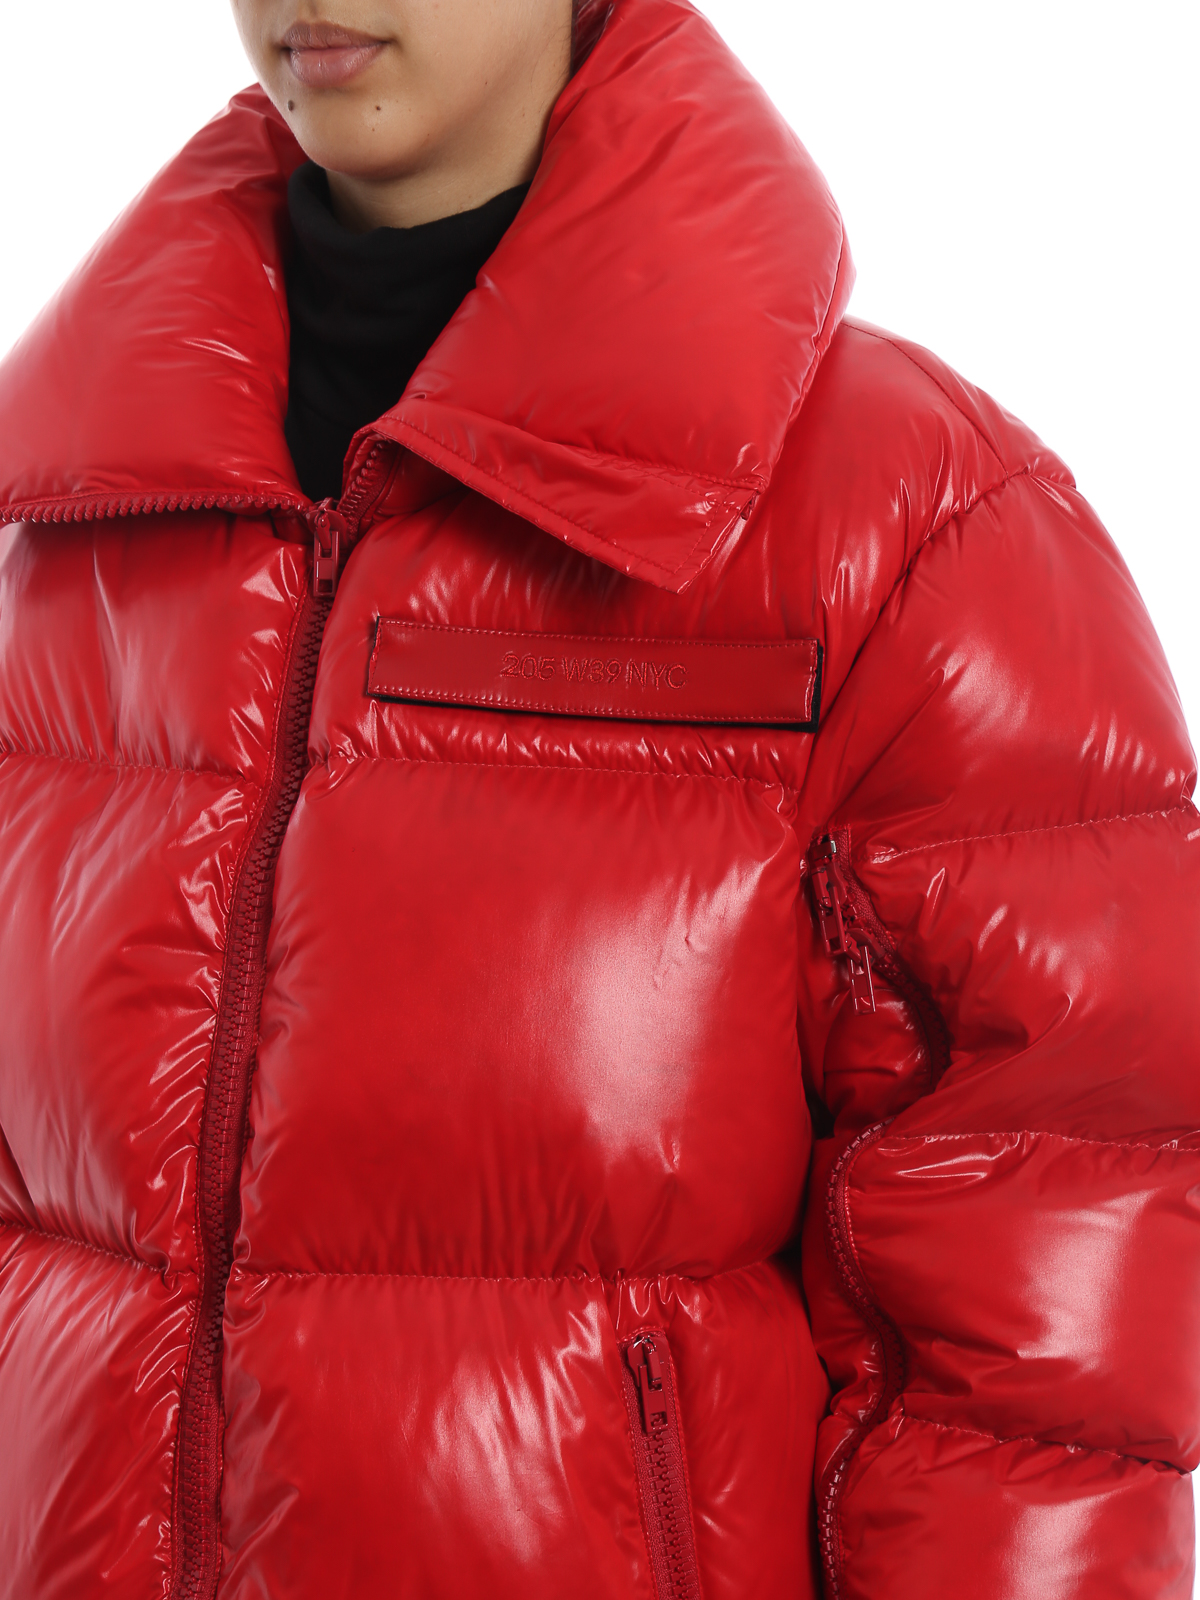 Padded jackets Calvin Klein - Orange red shiny nylon over puffer jacket -  83WWCB77P087802